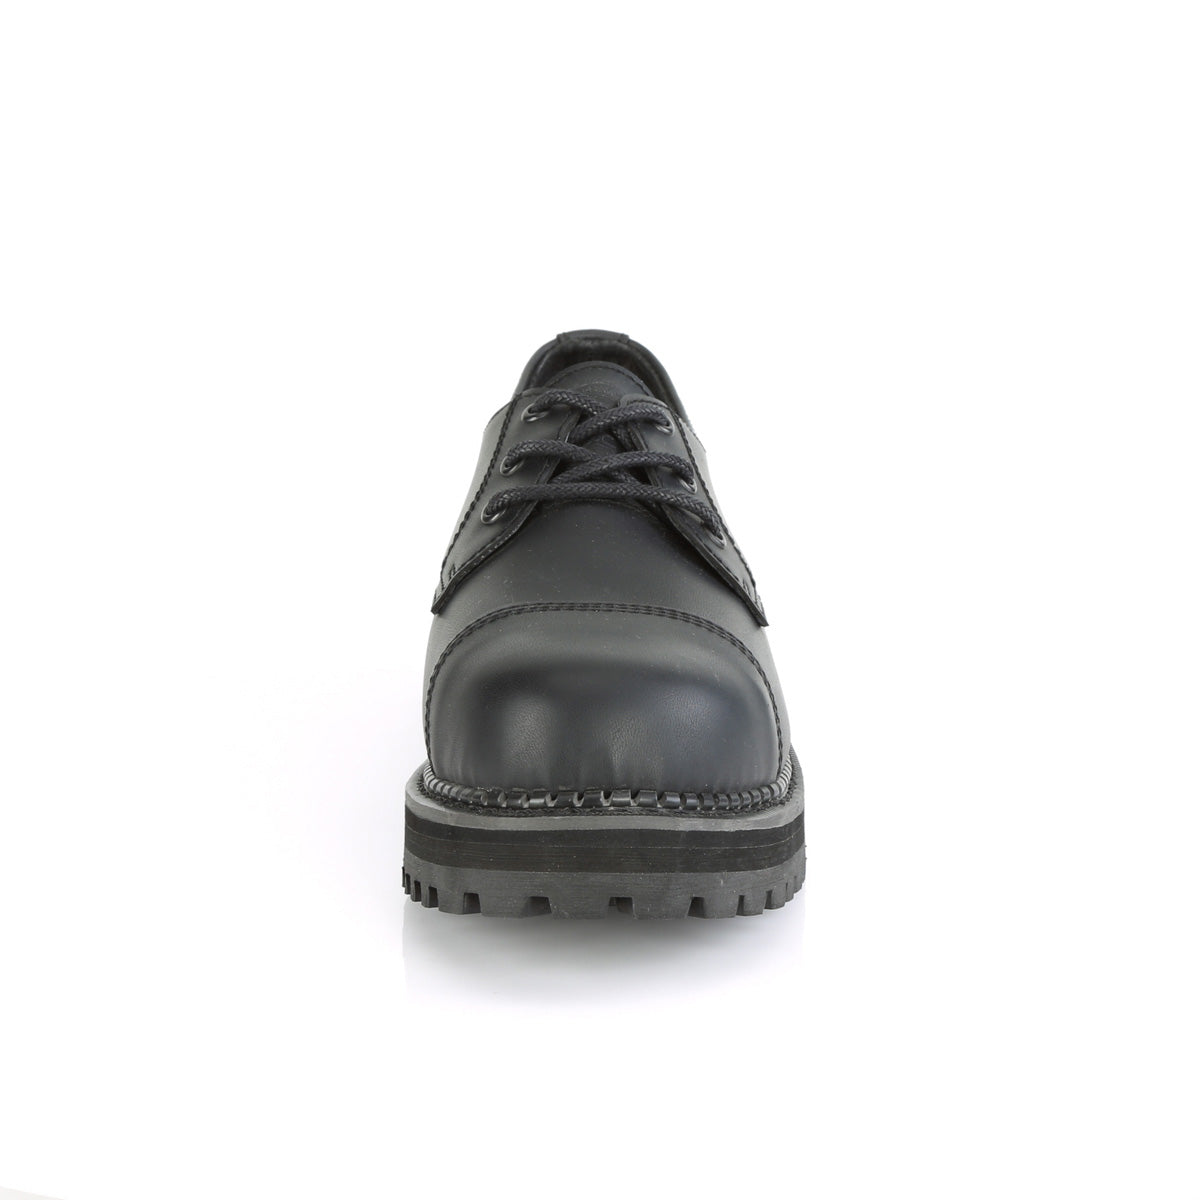 RIOT-03 Black Vegan Leather Shoe Demonia